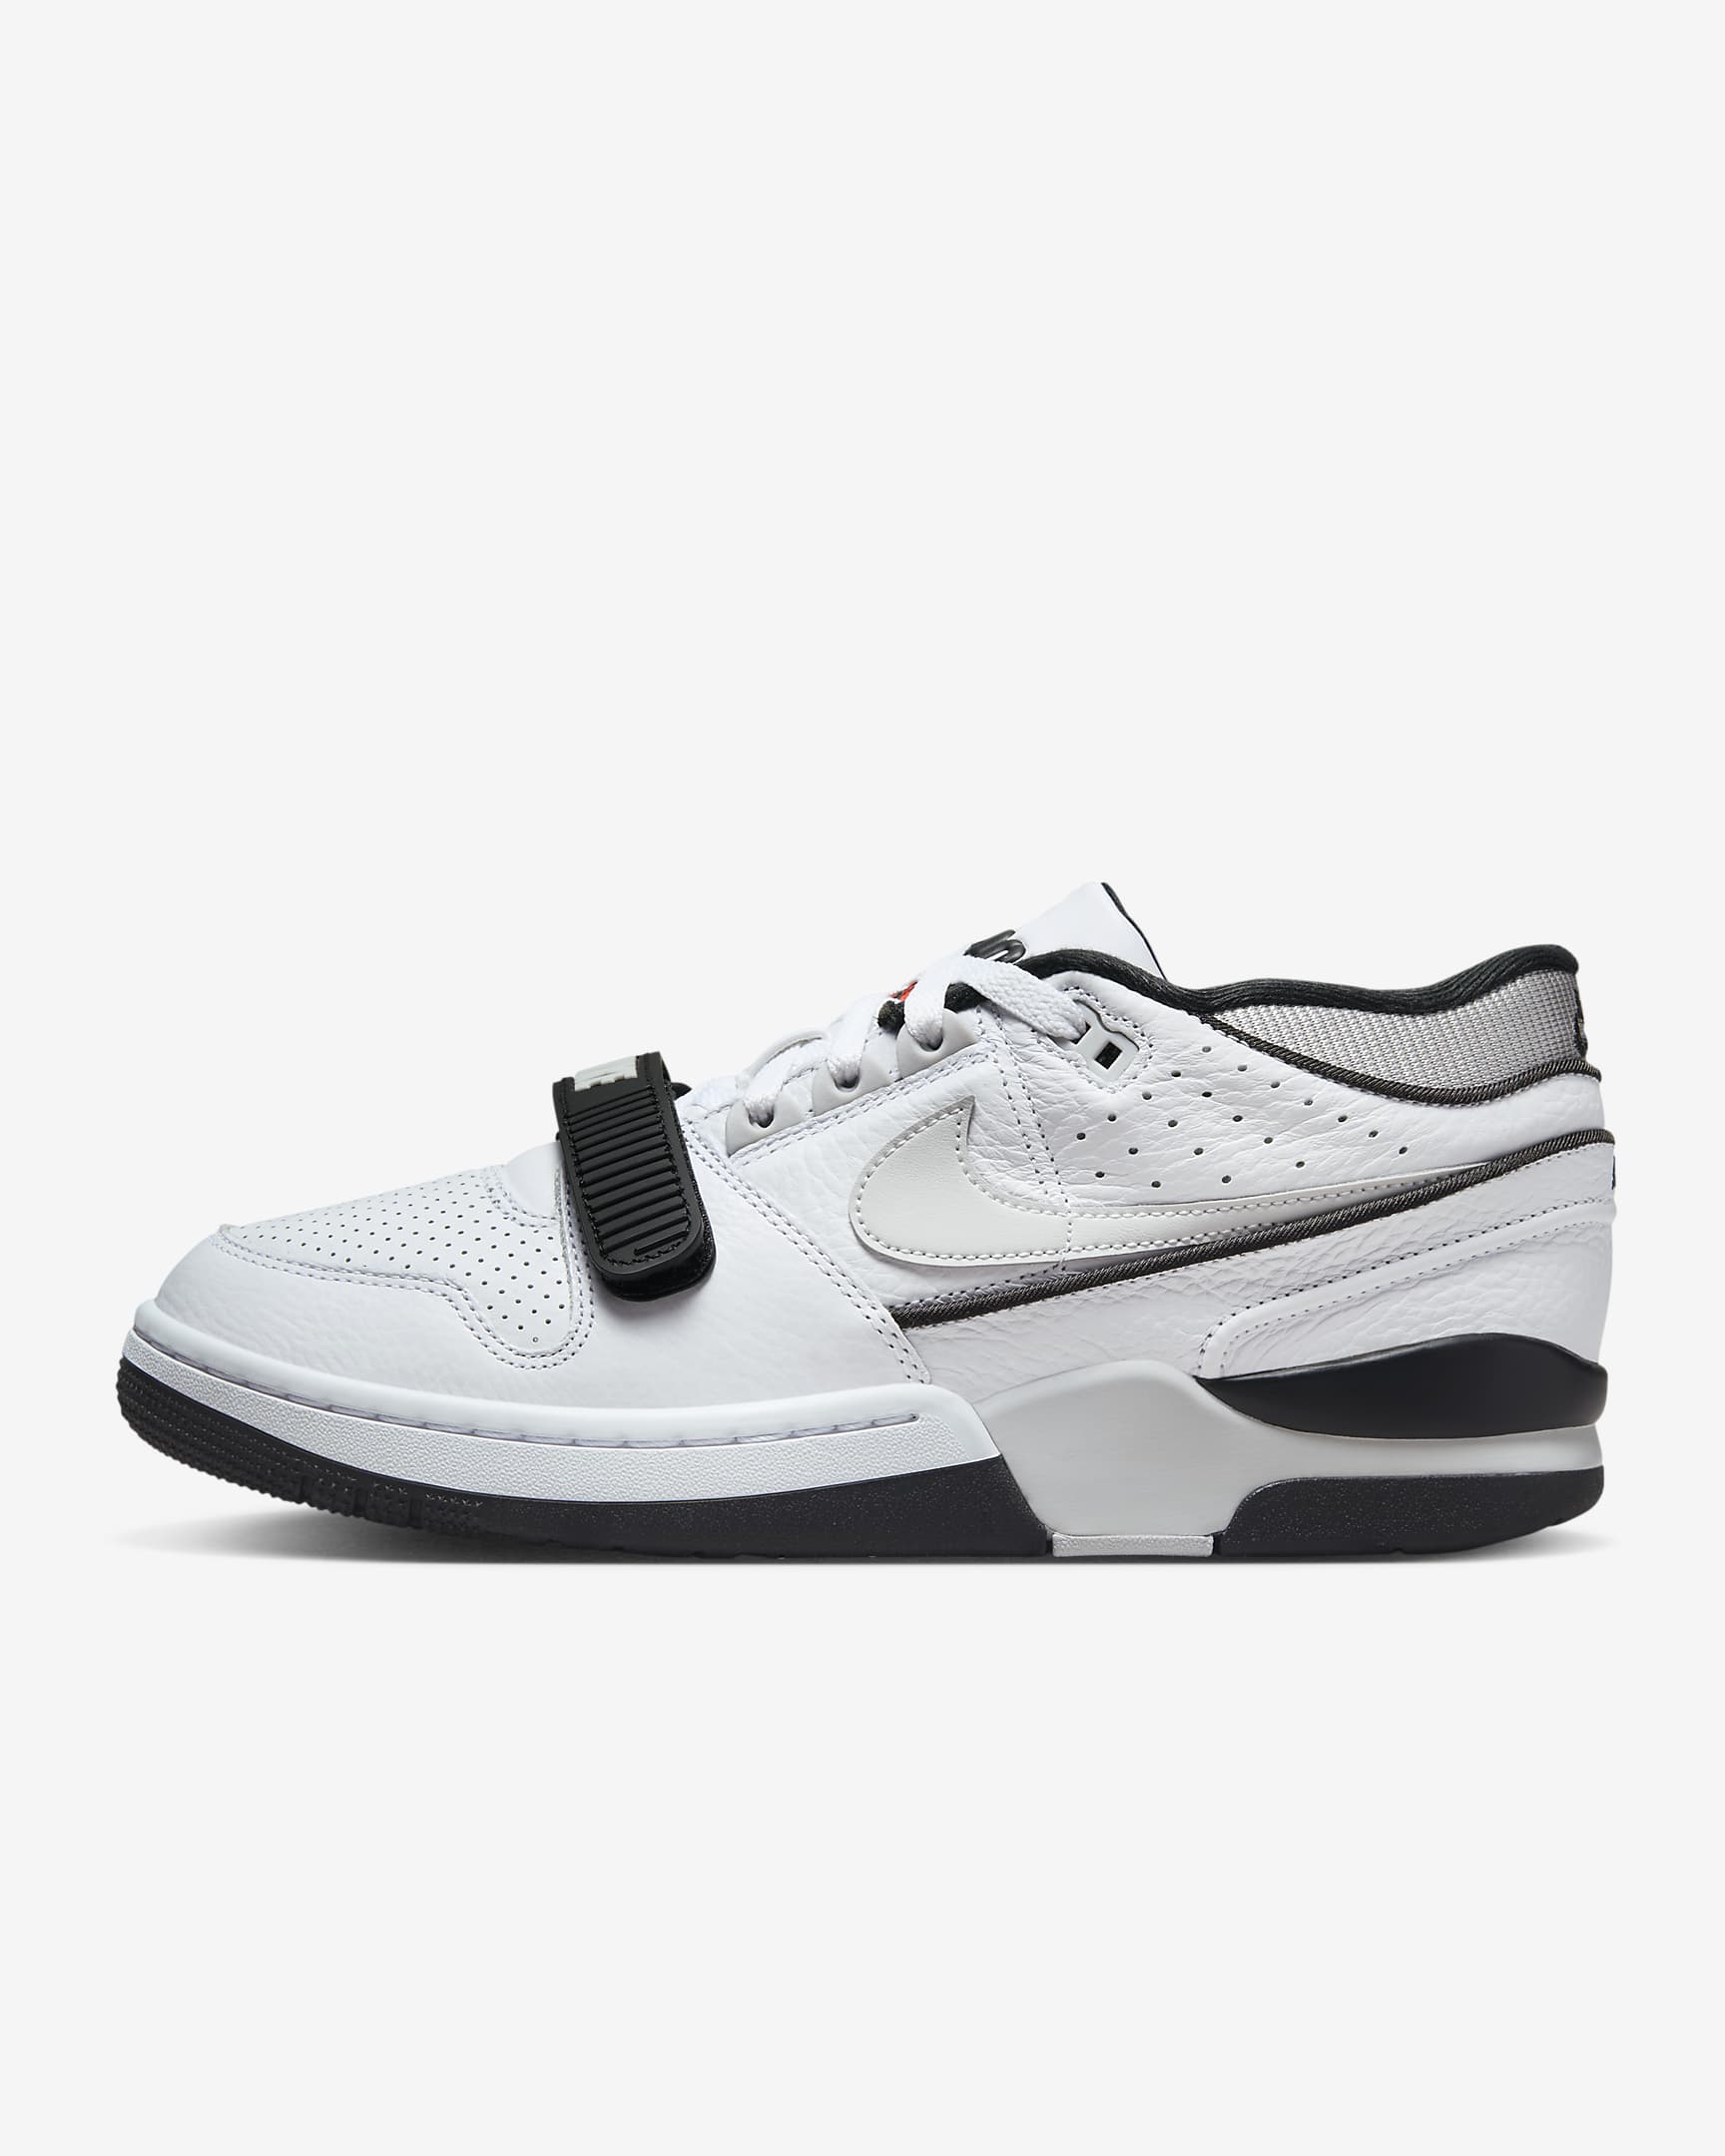 Nike Air Alpha Force 88 Men's Shoes - White/Black/Tech Grey/Neutral Grey